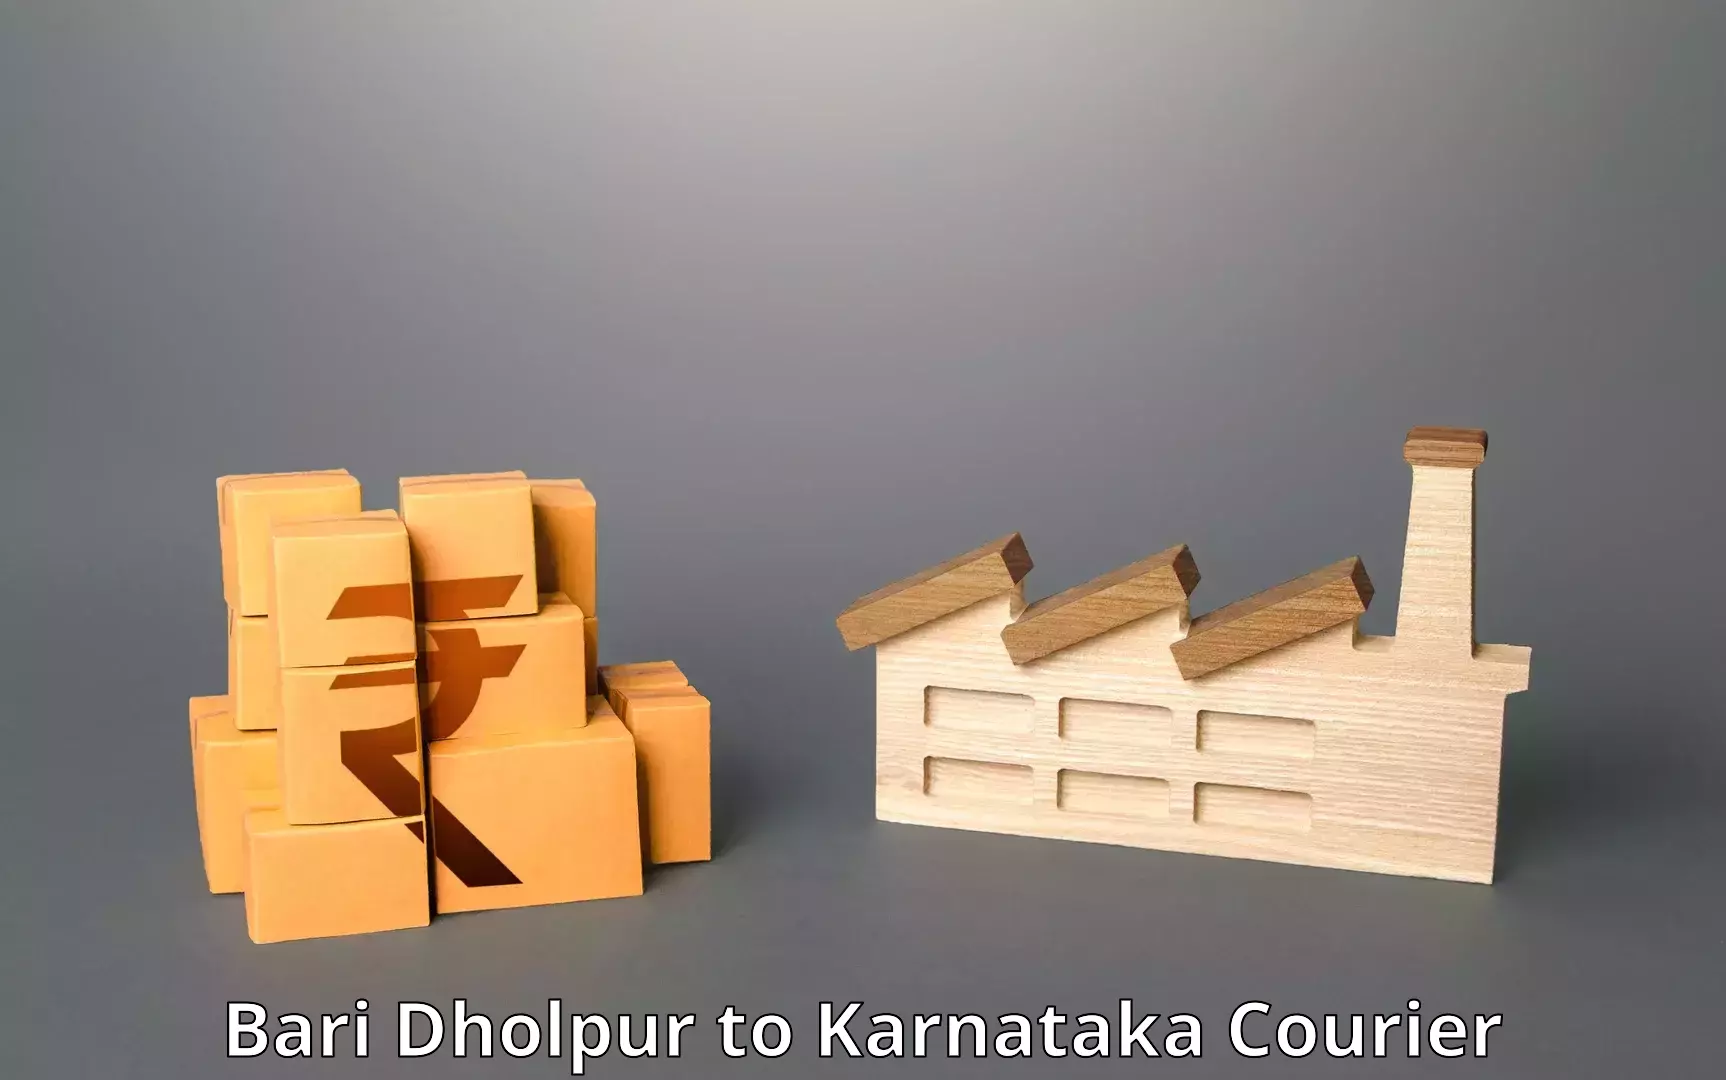 Same-day delivery solutions Bari Dholpur to Karnataka